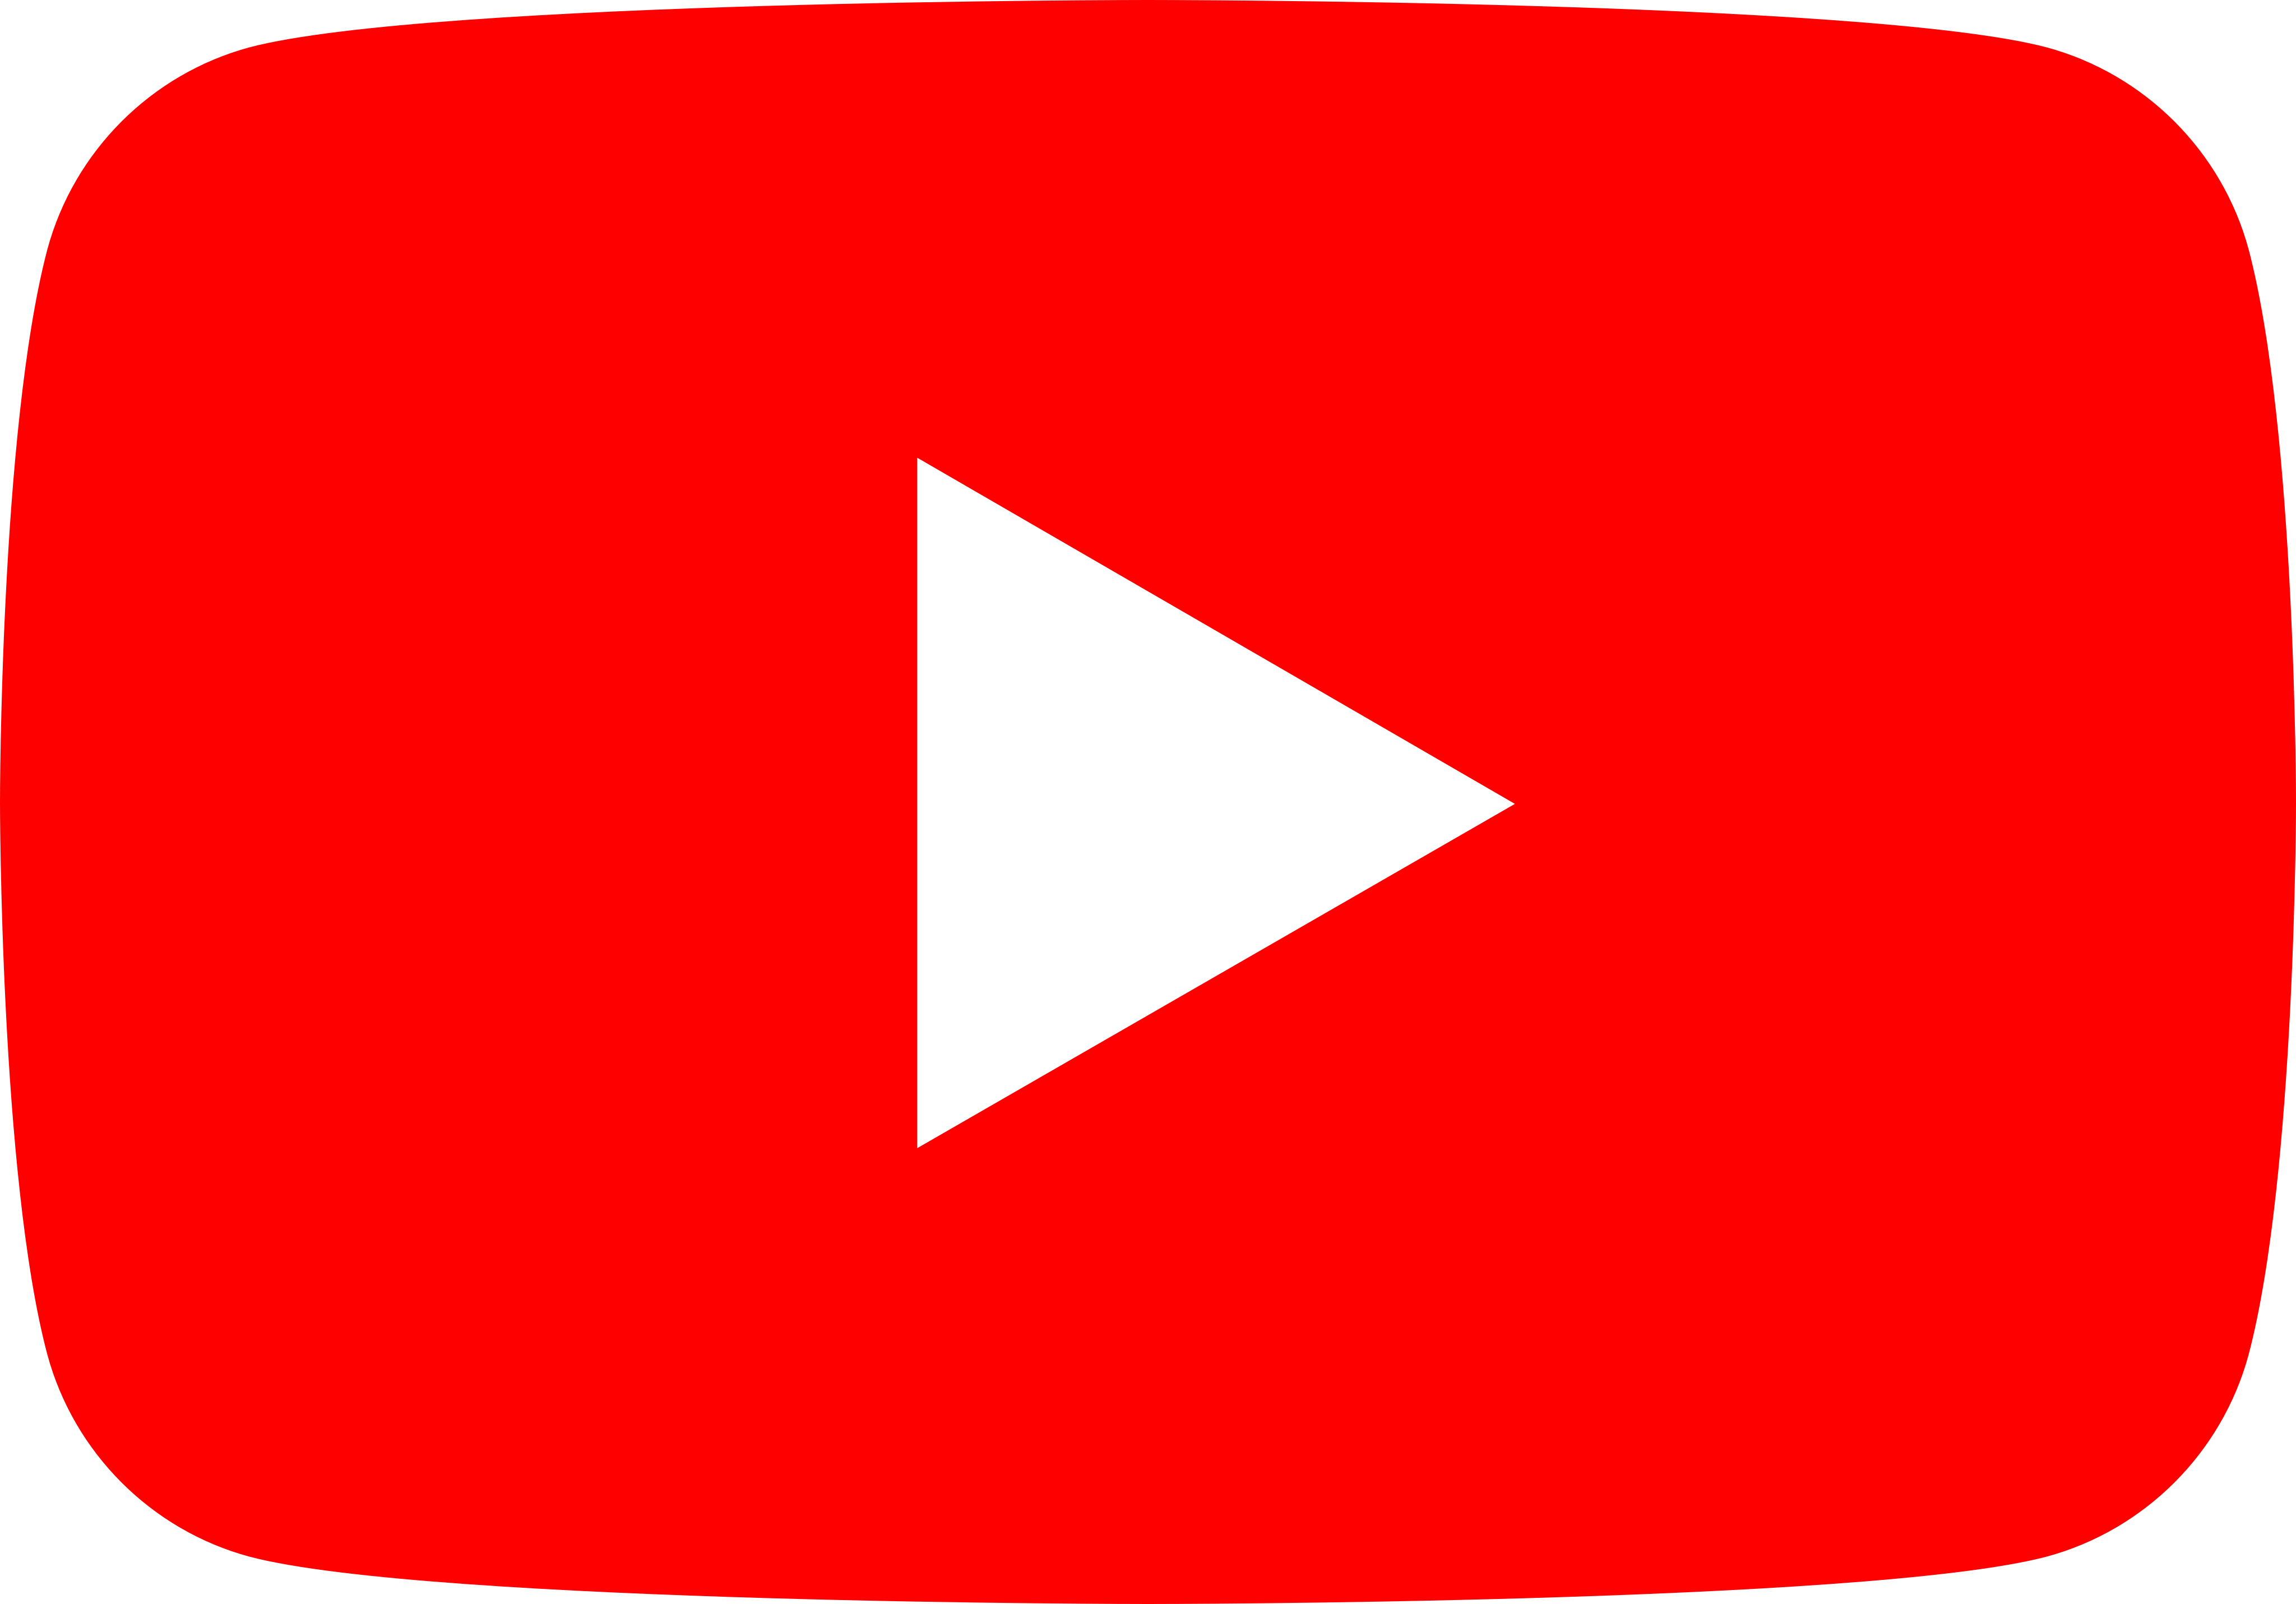 youtube-logo-5-2